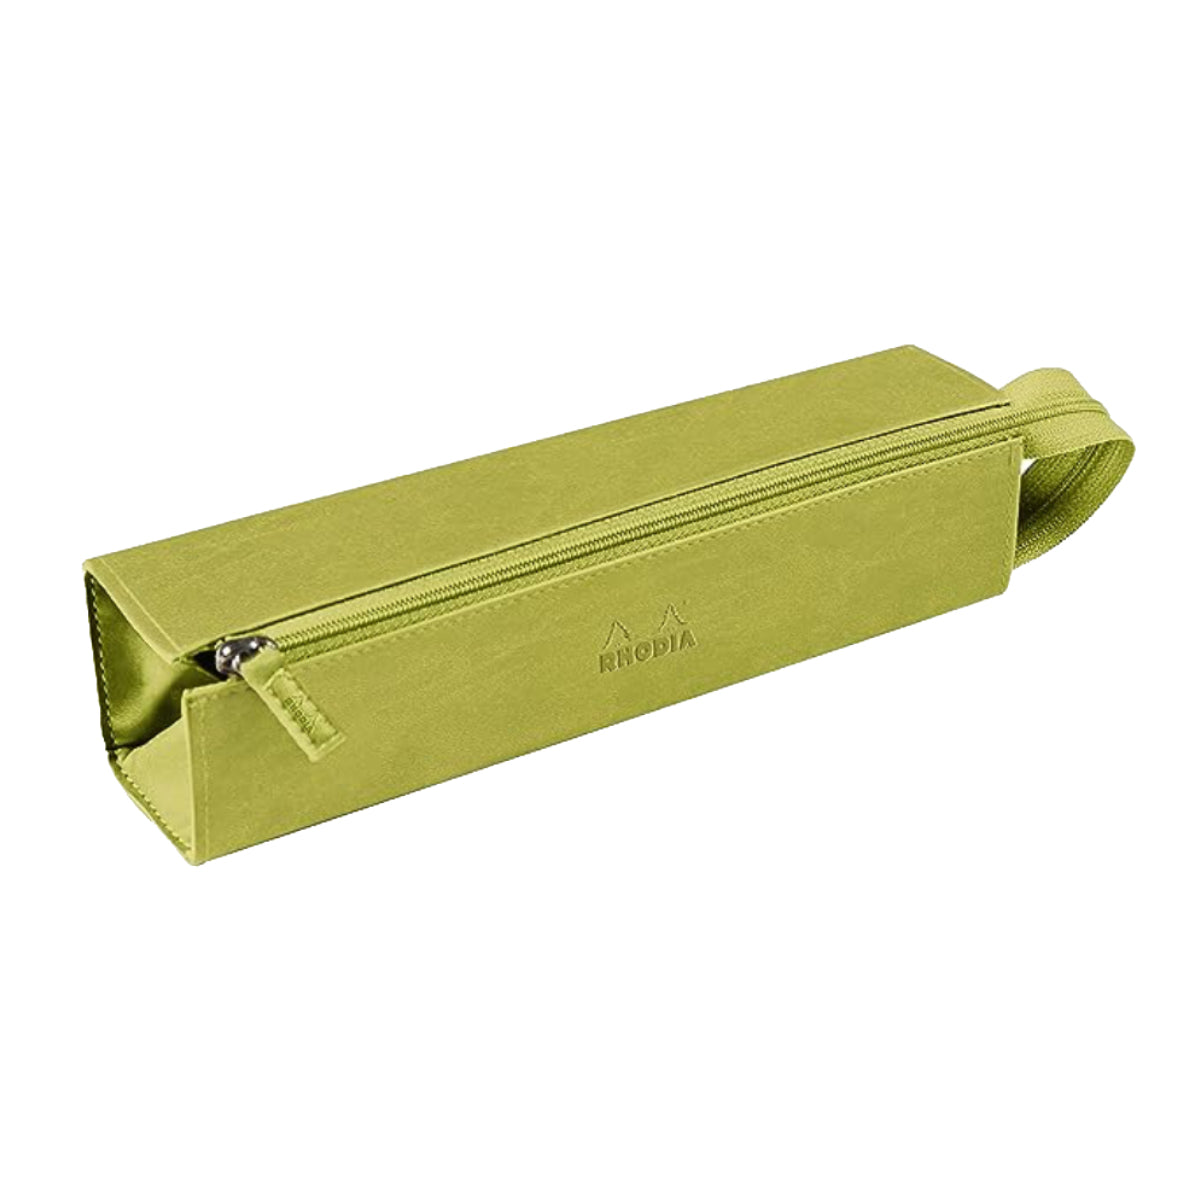 RHODIA rhodiarama Square Pencil Case with Zipper, PU Leather, 230 x 50 mm, Light Green